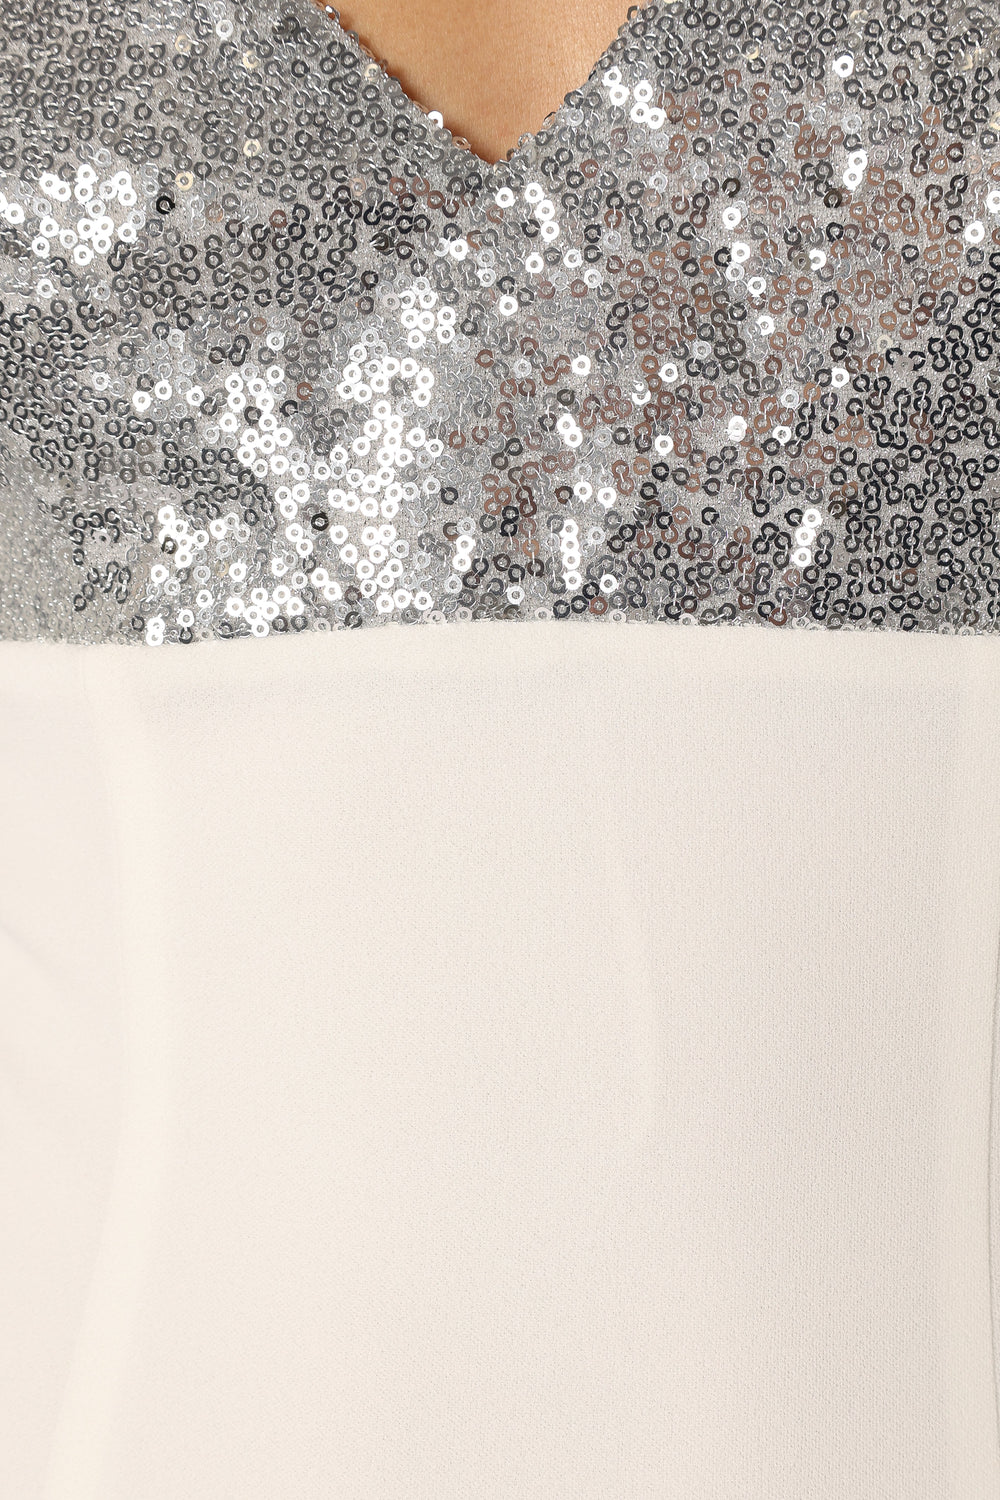 Shop Formal Dress - Kylie Slip Dress - White Silver sixth image